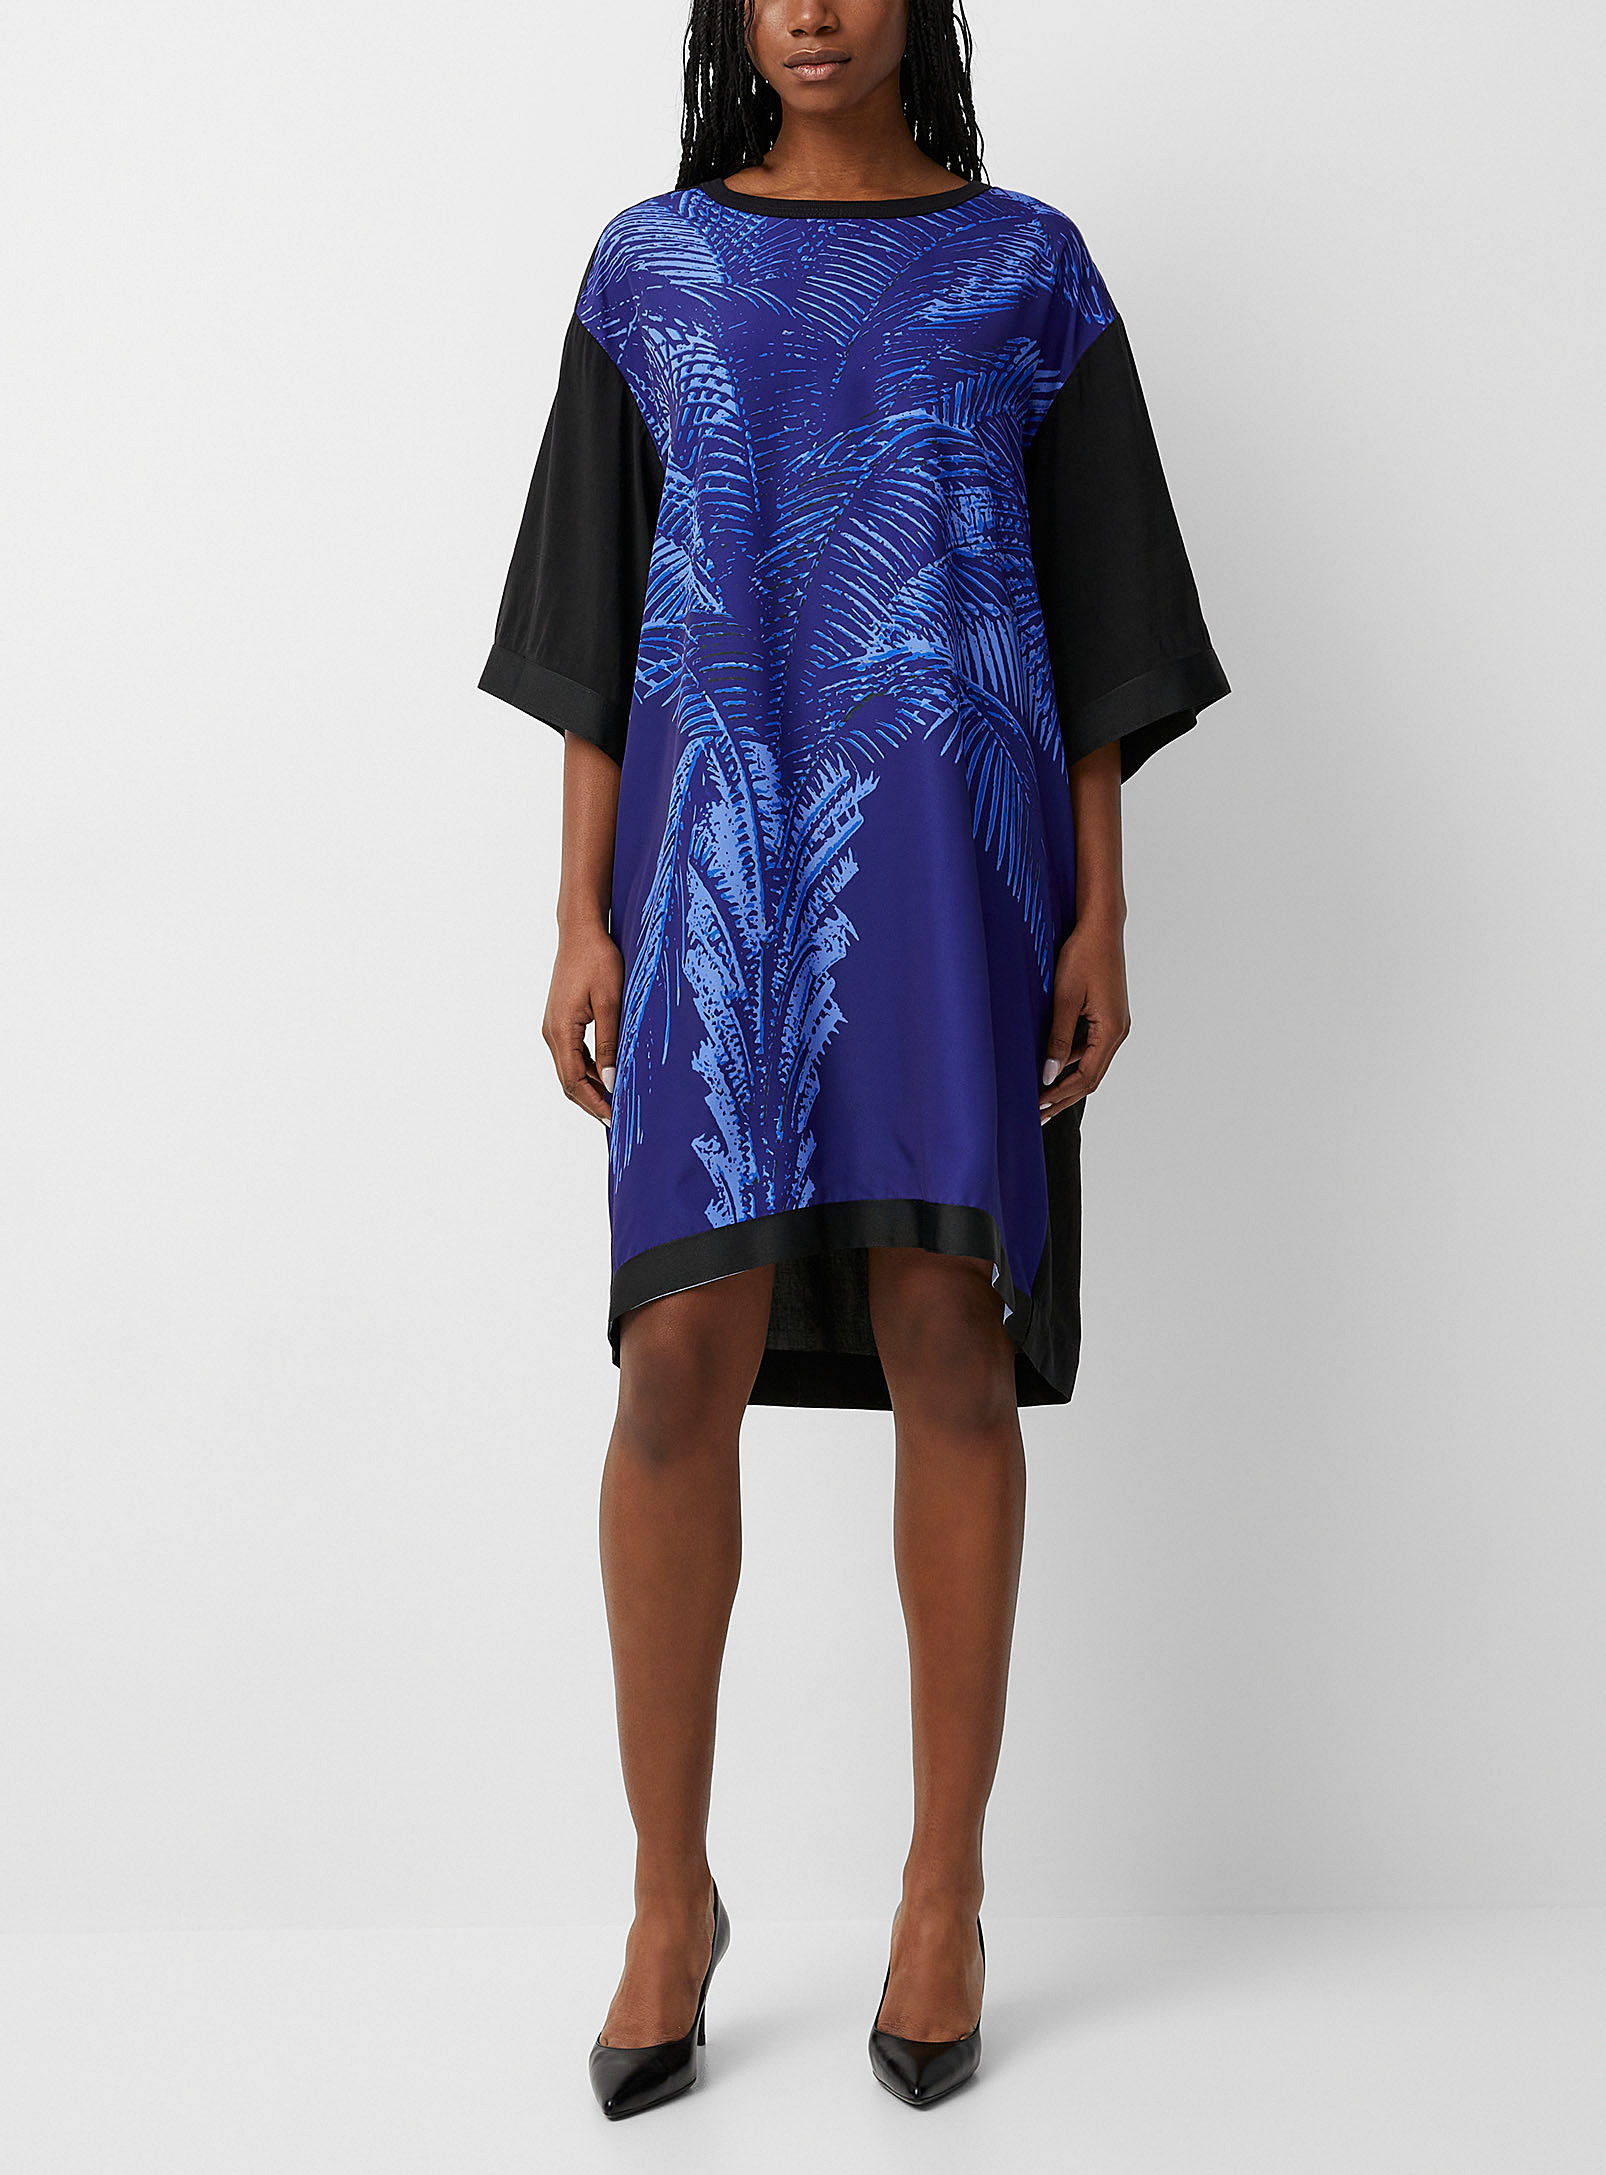 Denis Gagnon - Women's Palm tree print Tunic Top dress